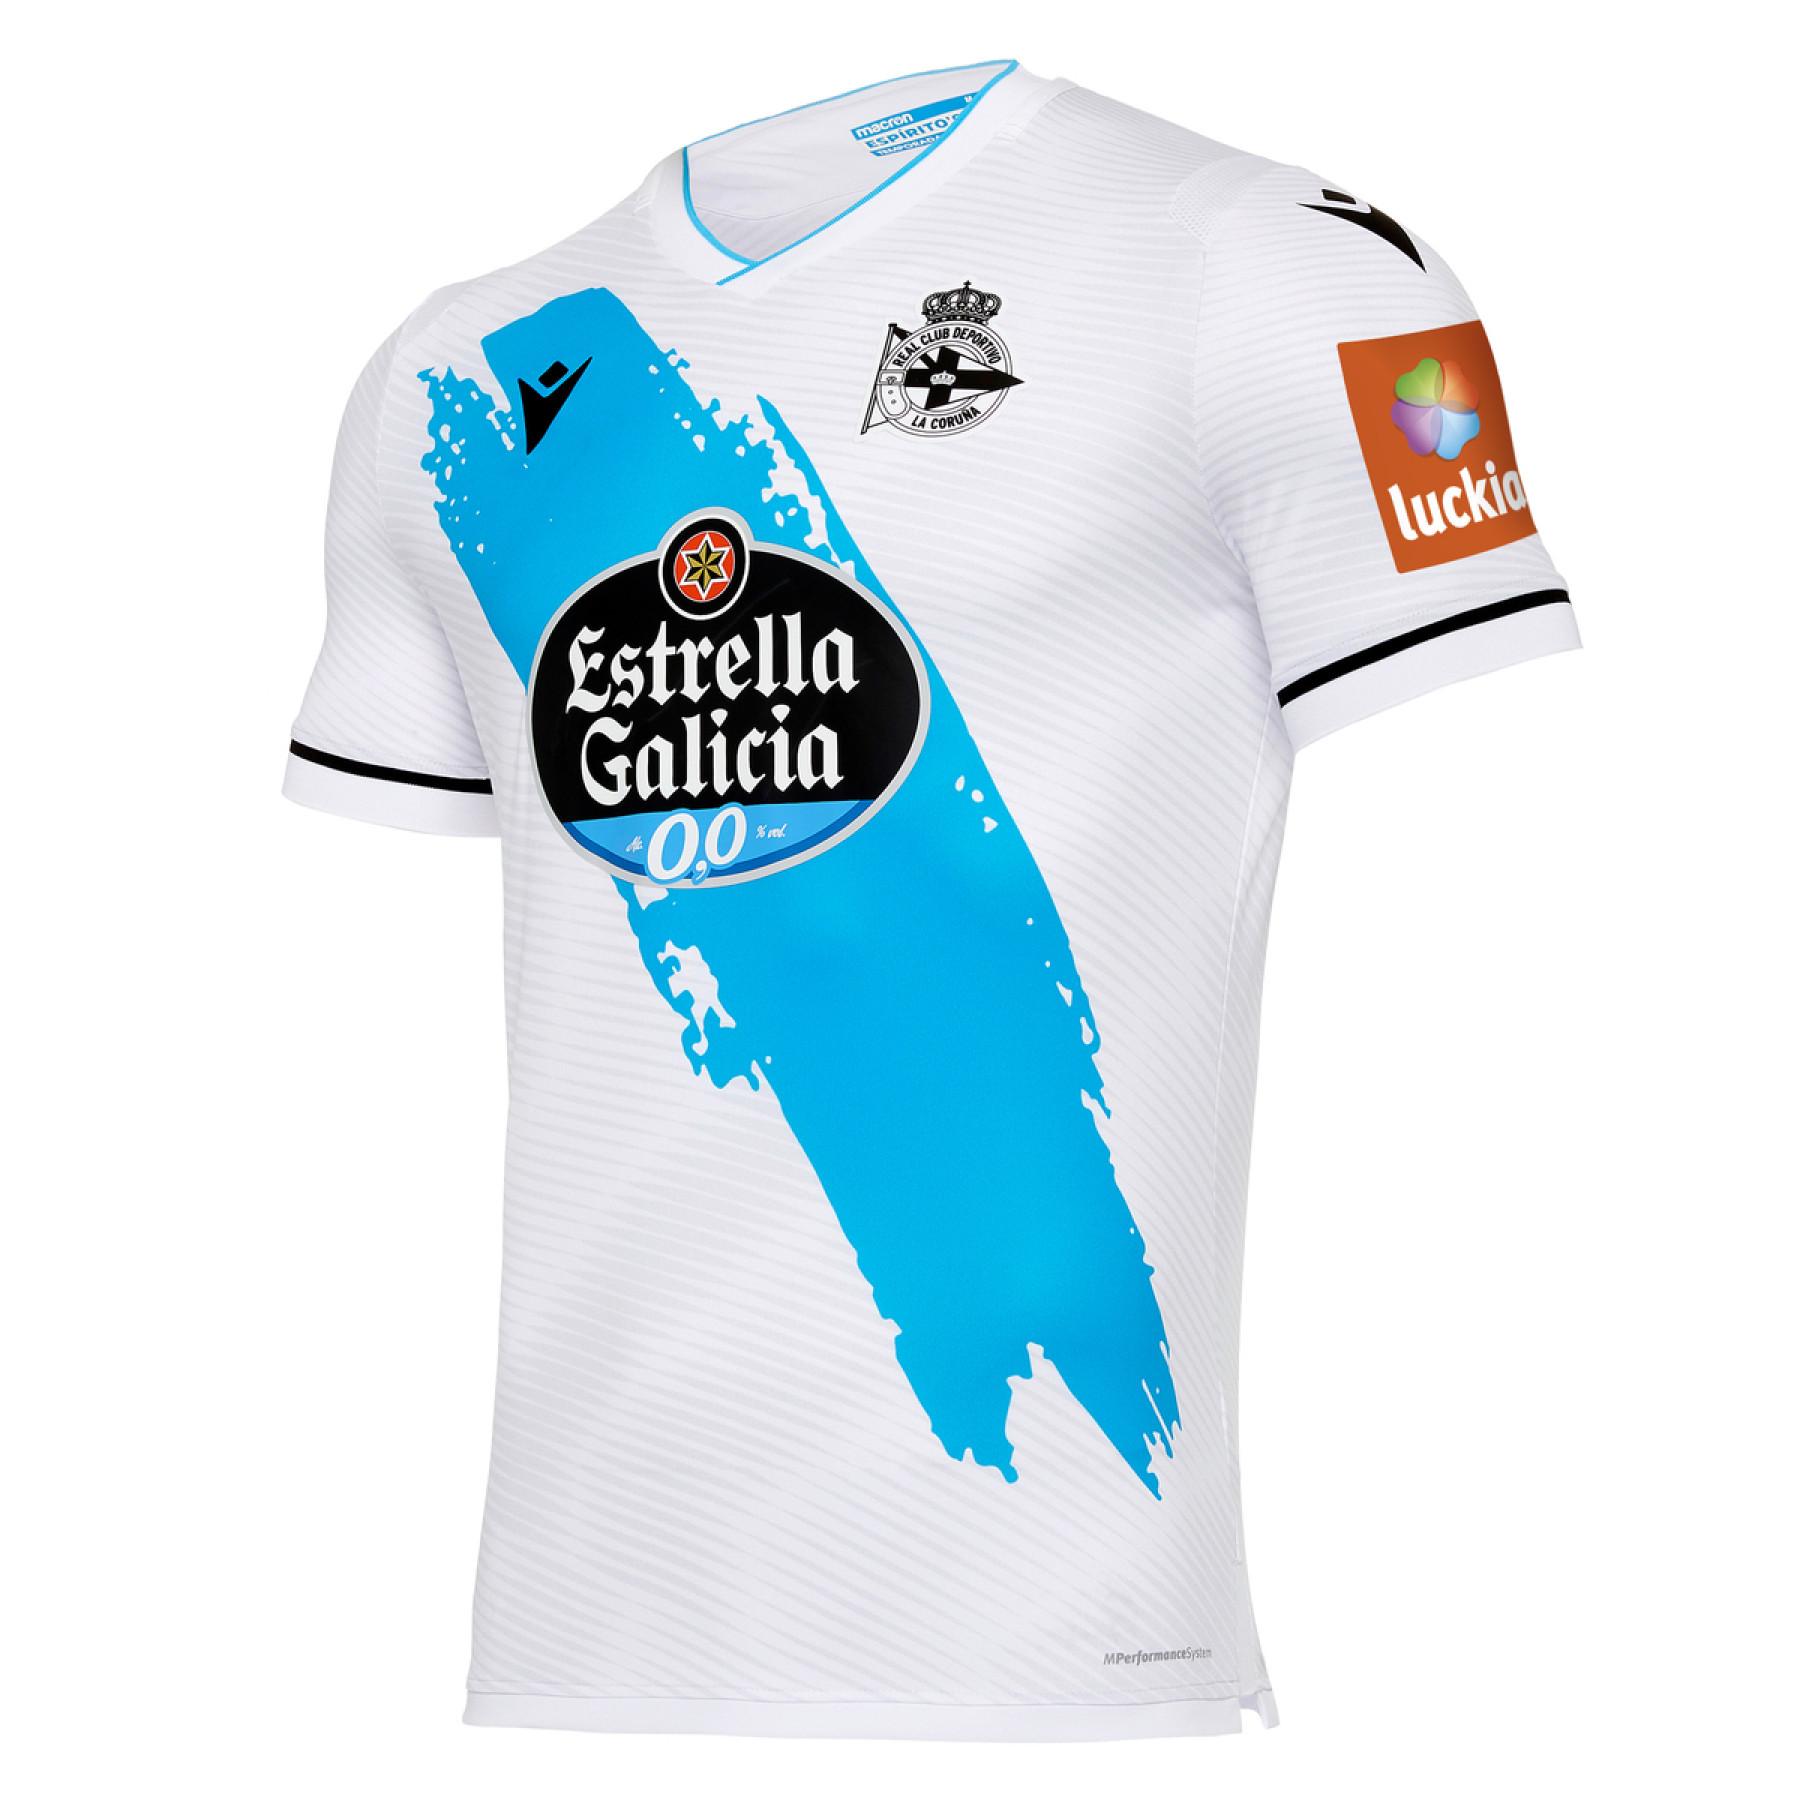 Allega jersey Deportivo La Corogne 2020/21